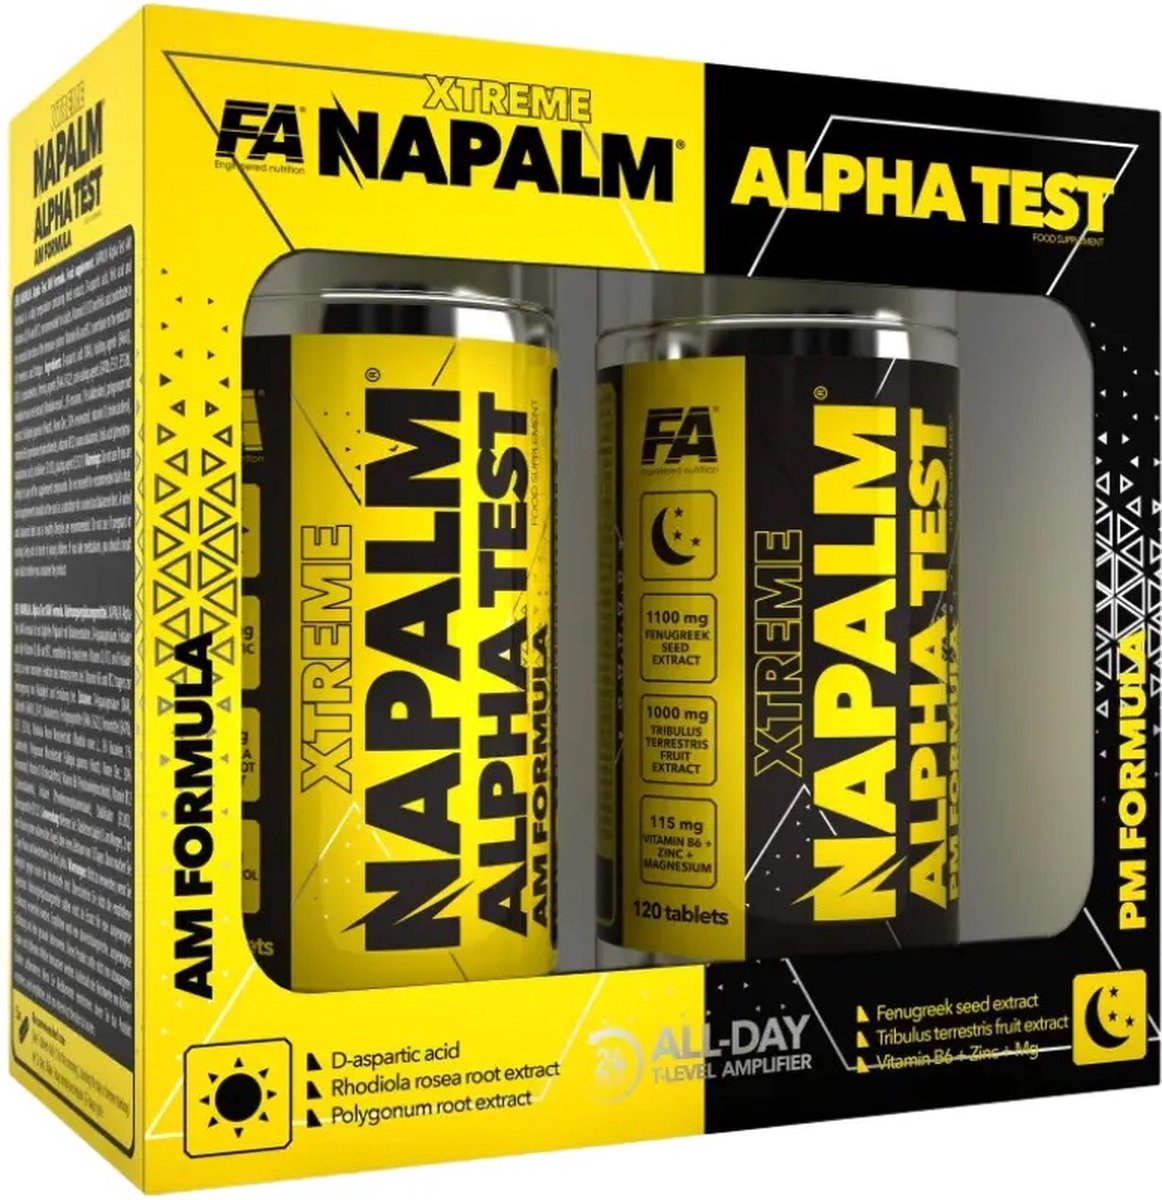 FA Xtreme Napalm Alpha test - AM PM Formula - Testosterone booster - DAA, Fenugreek, Tribulus, vitaminen, mineralen - 240 tabs